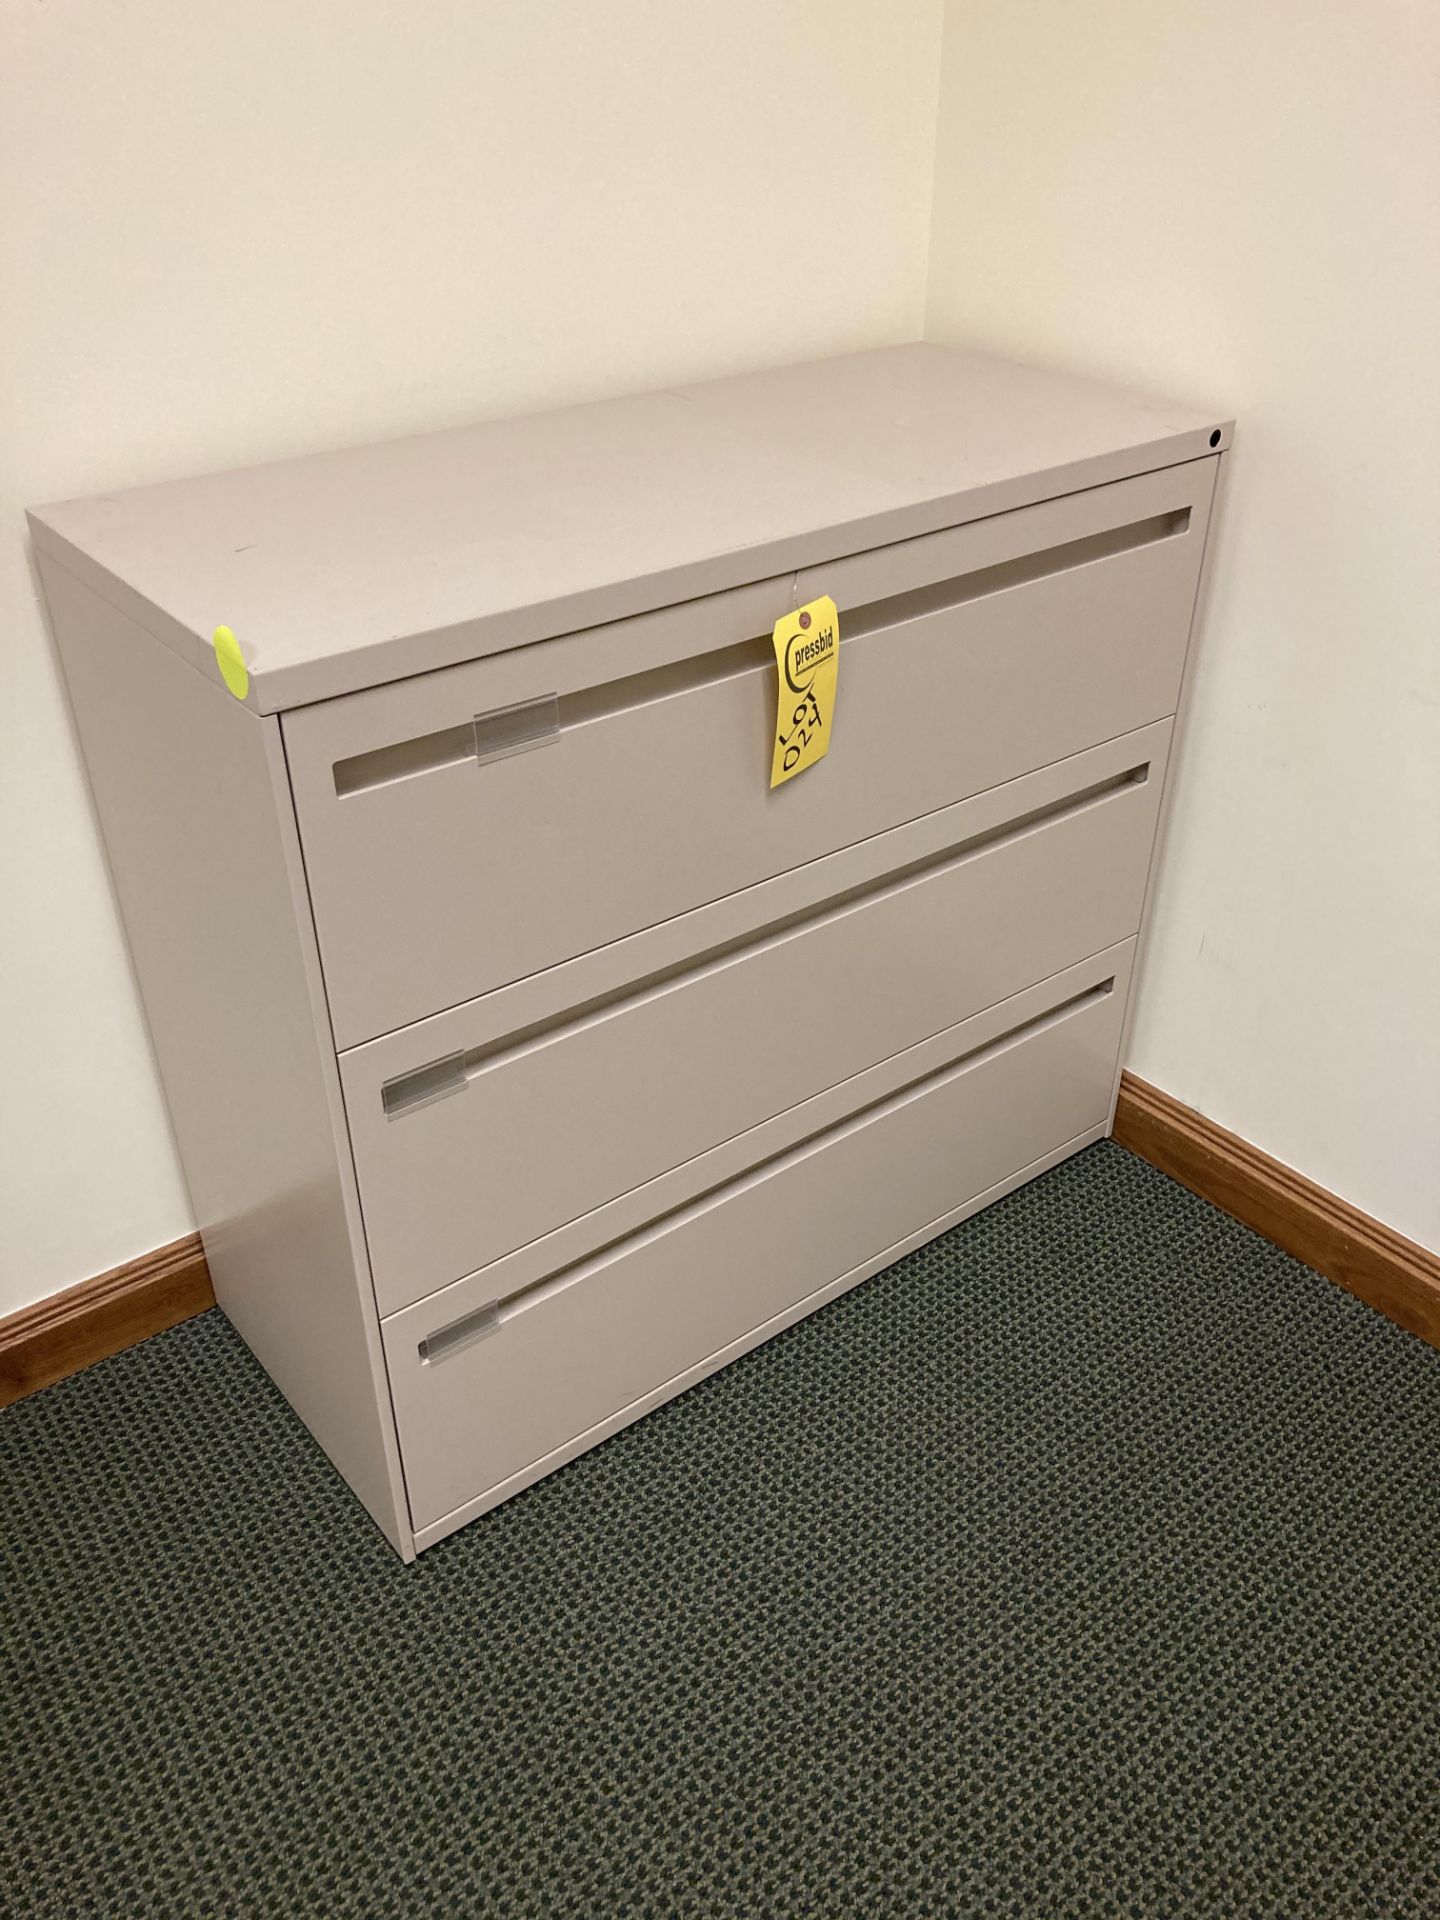 42" steel 3 drawer file cabinet